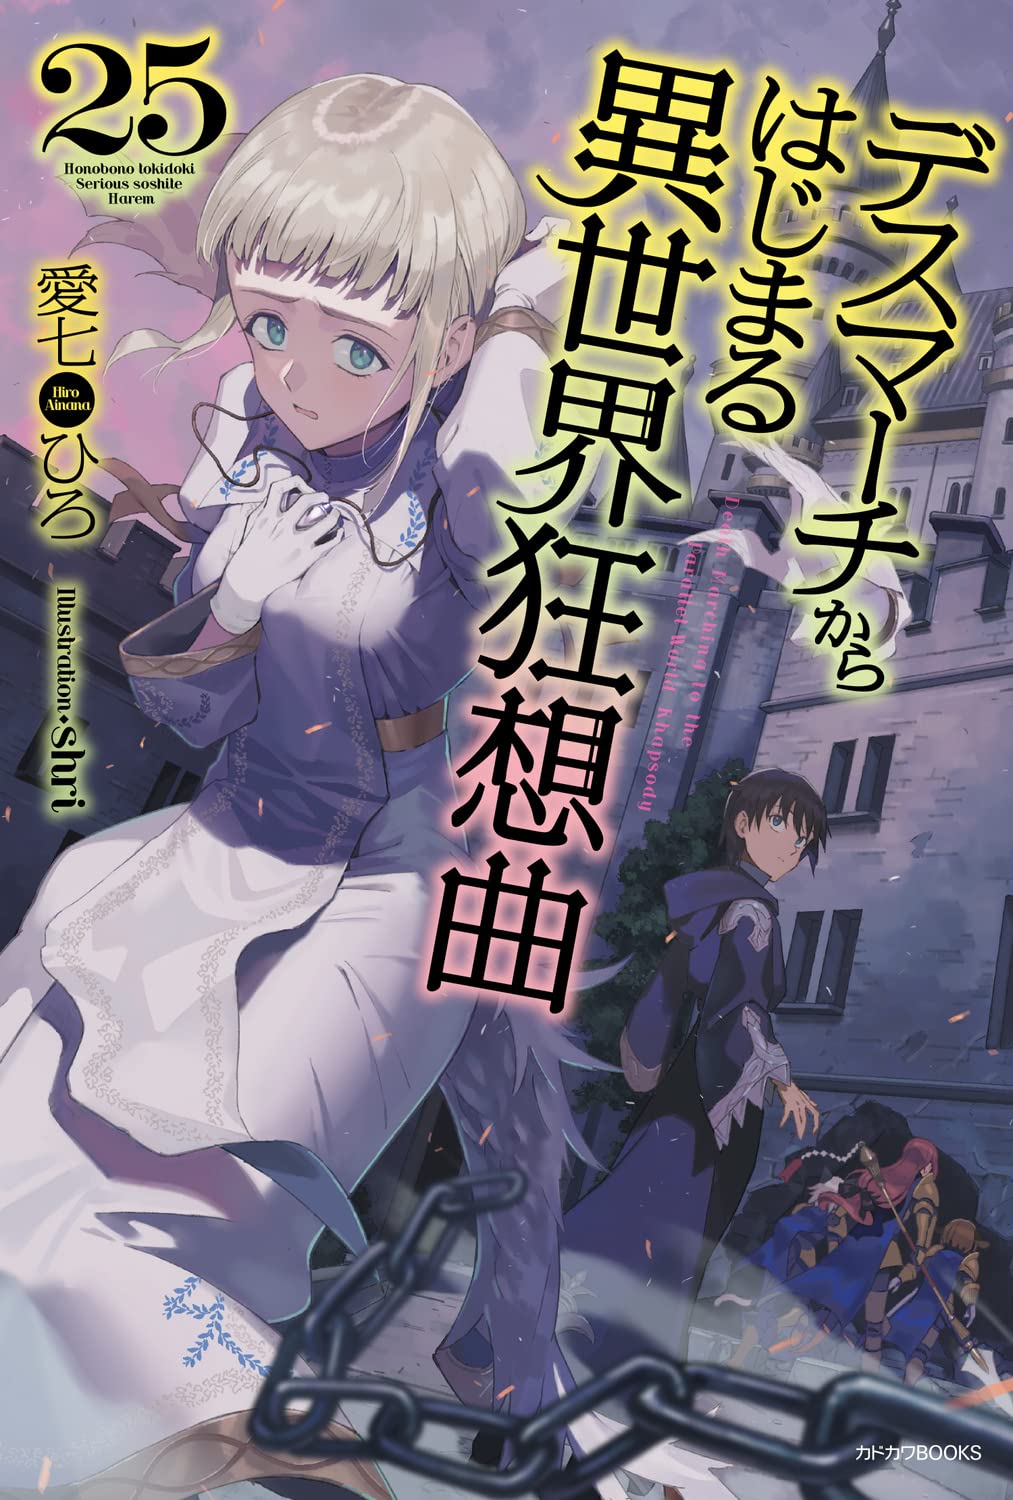 Anime Review: Death March kara Hajimaru Isekai Kyousoukyoku